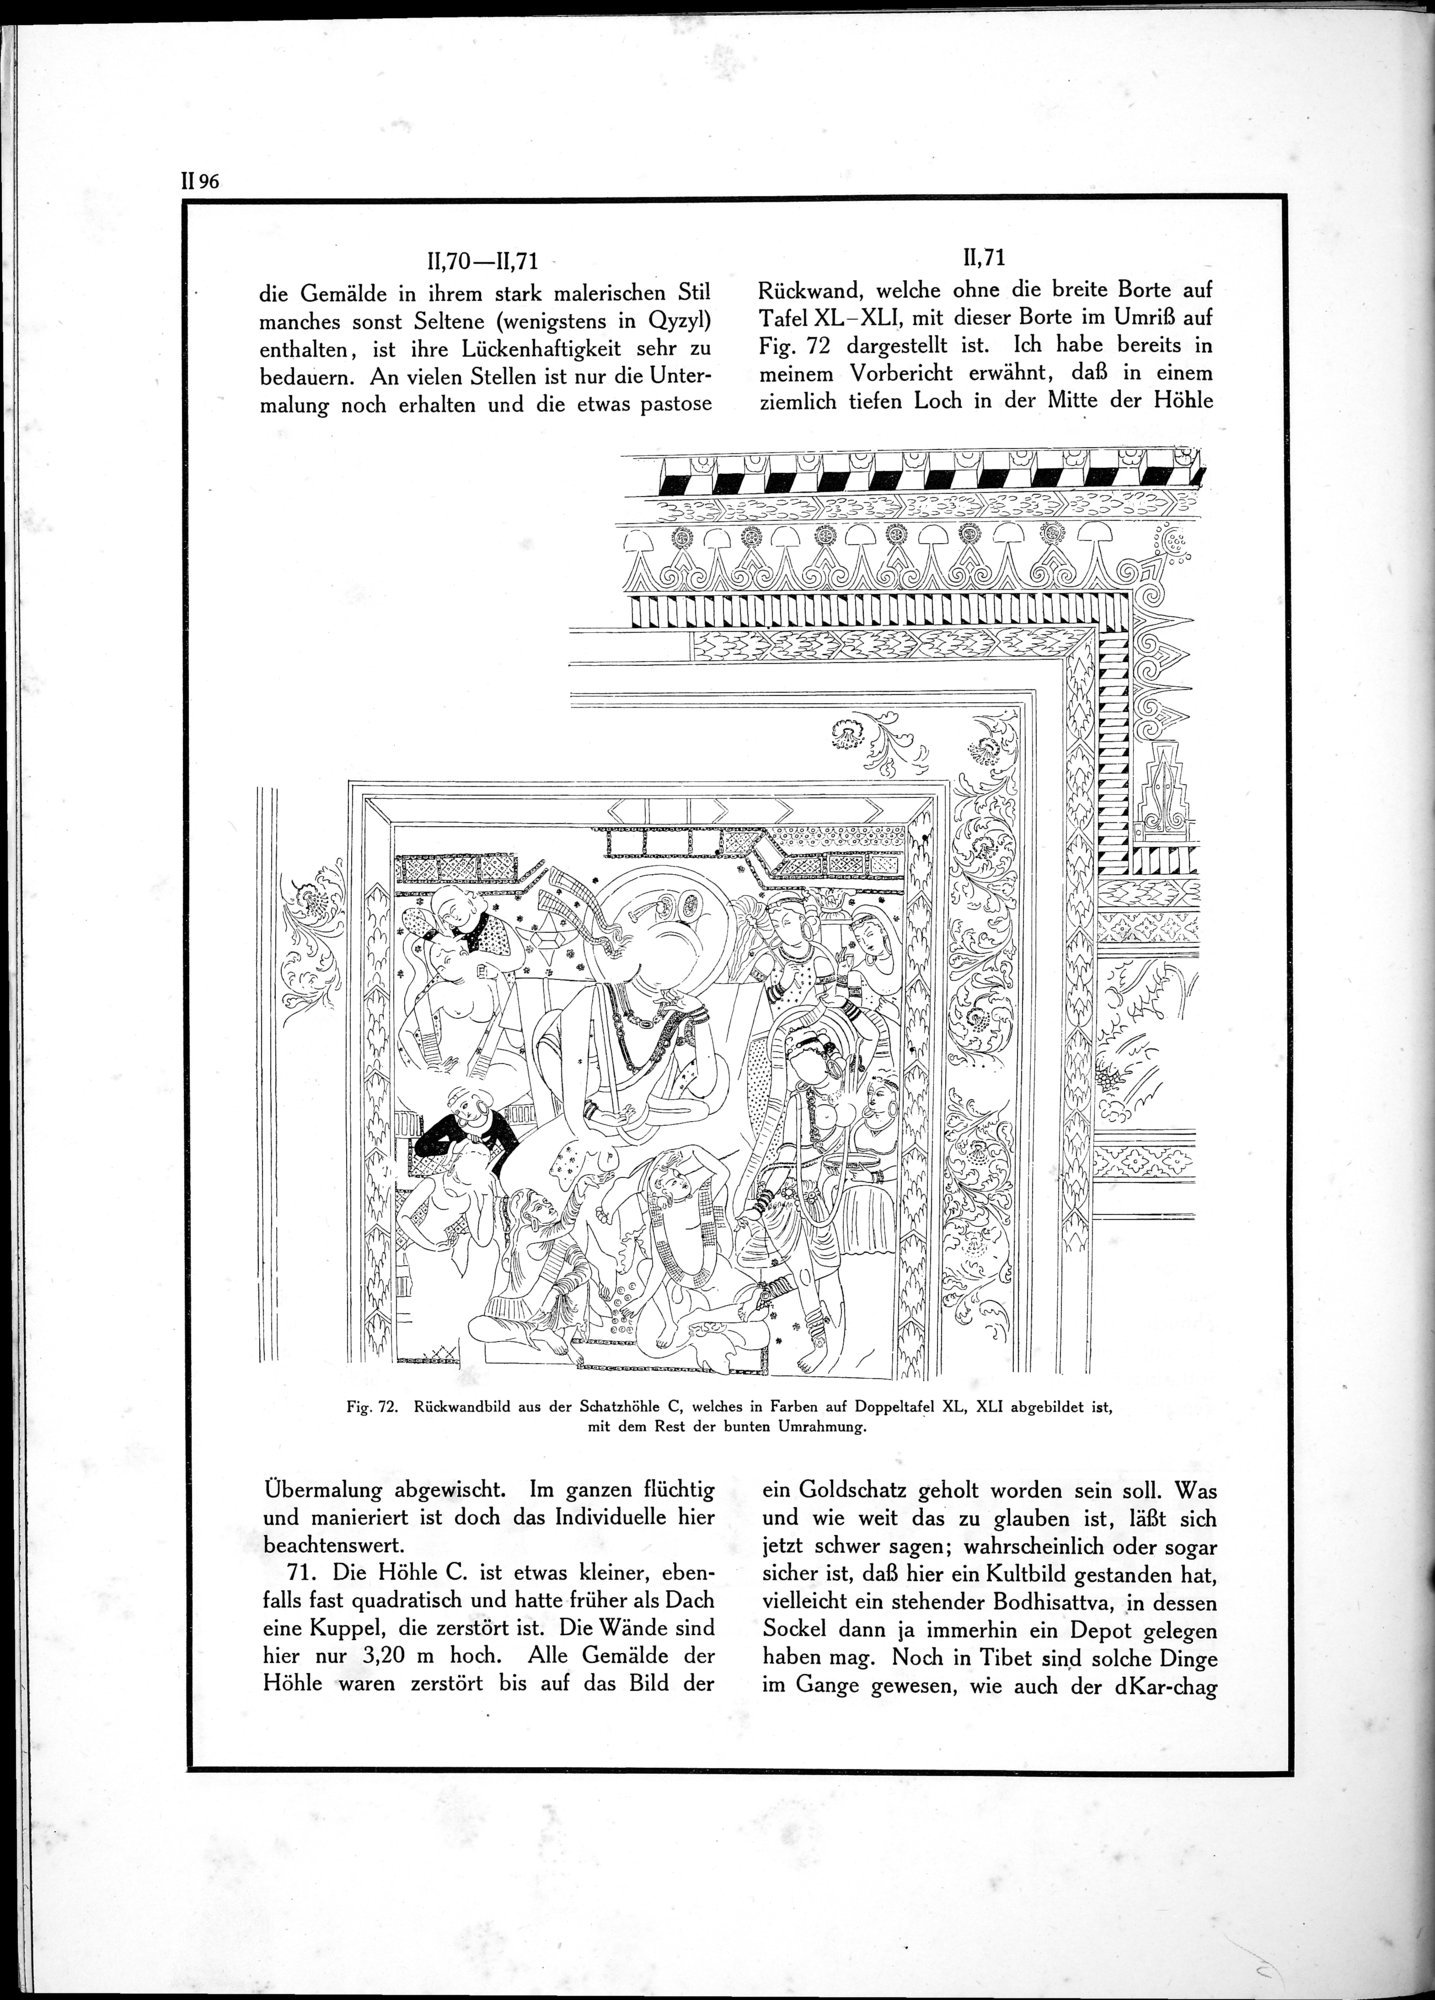 Alt-Kutscha : vol.1 / Page 218 (Grayscale High Resolution Image)